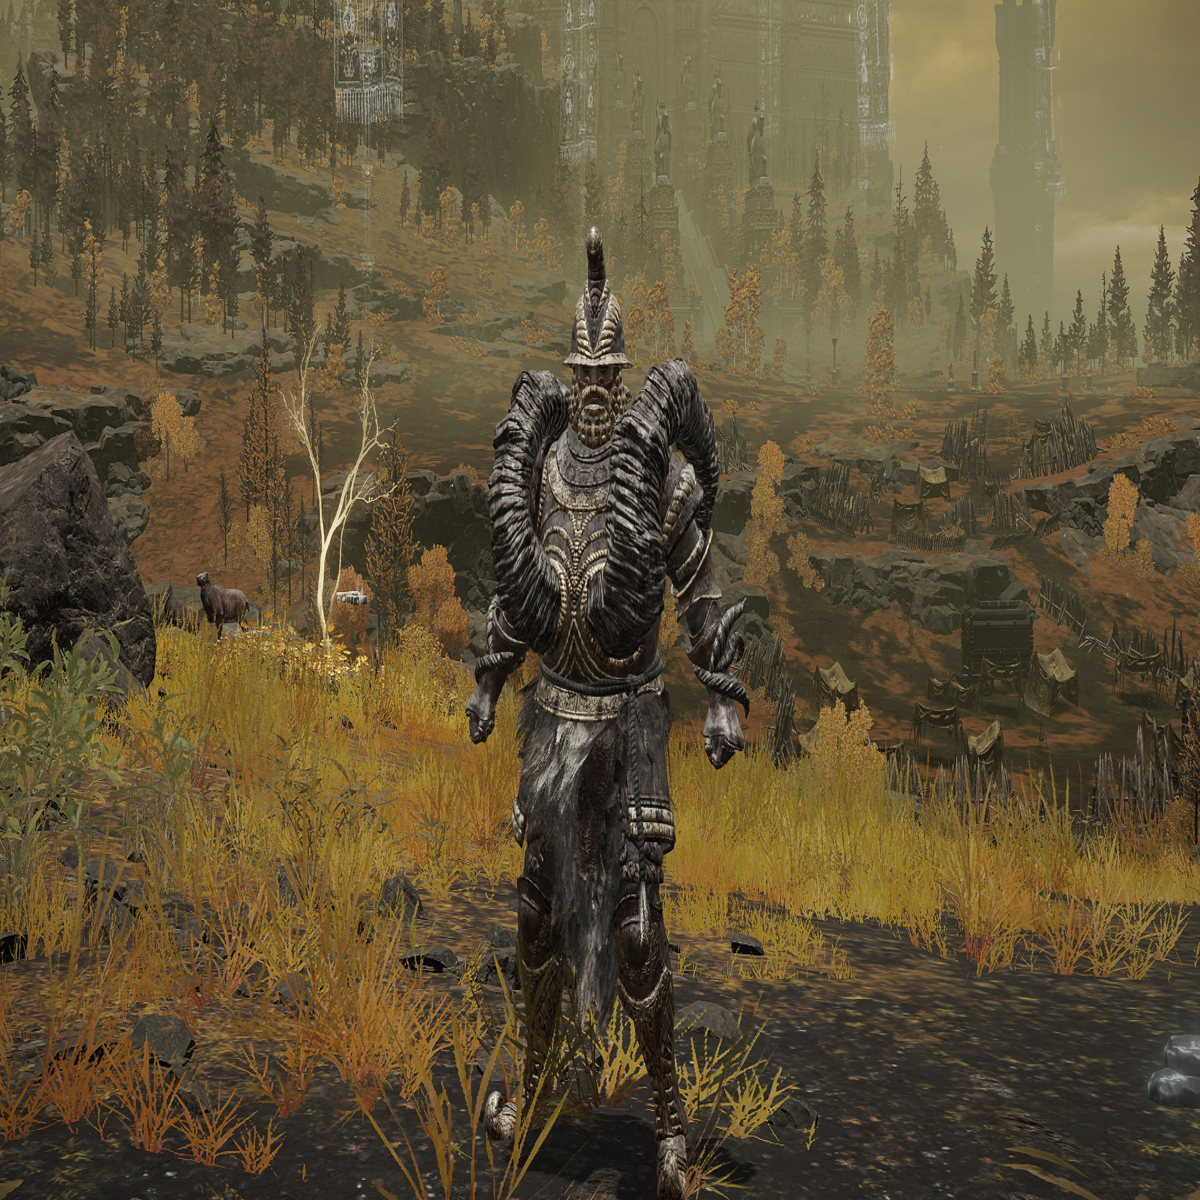 Dark souls mods-New Knight Armor